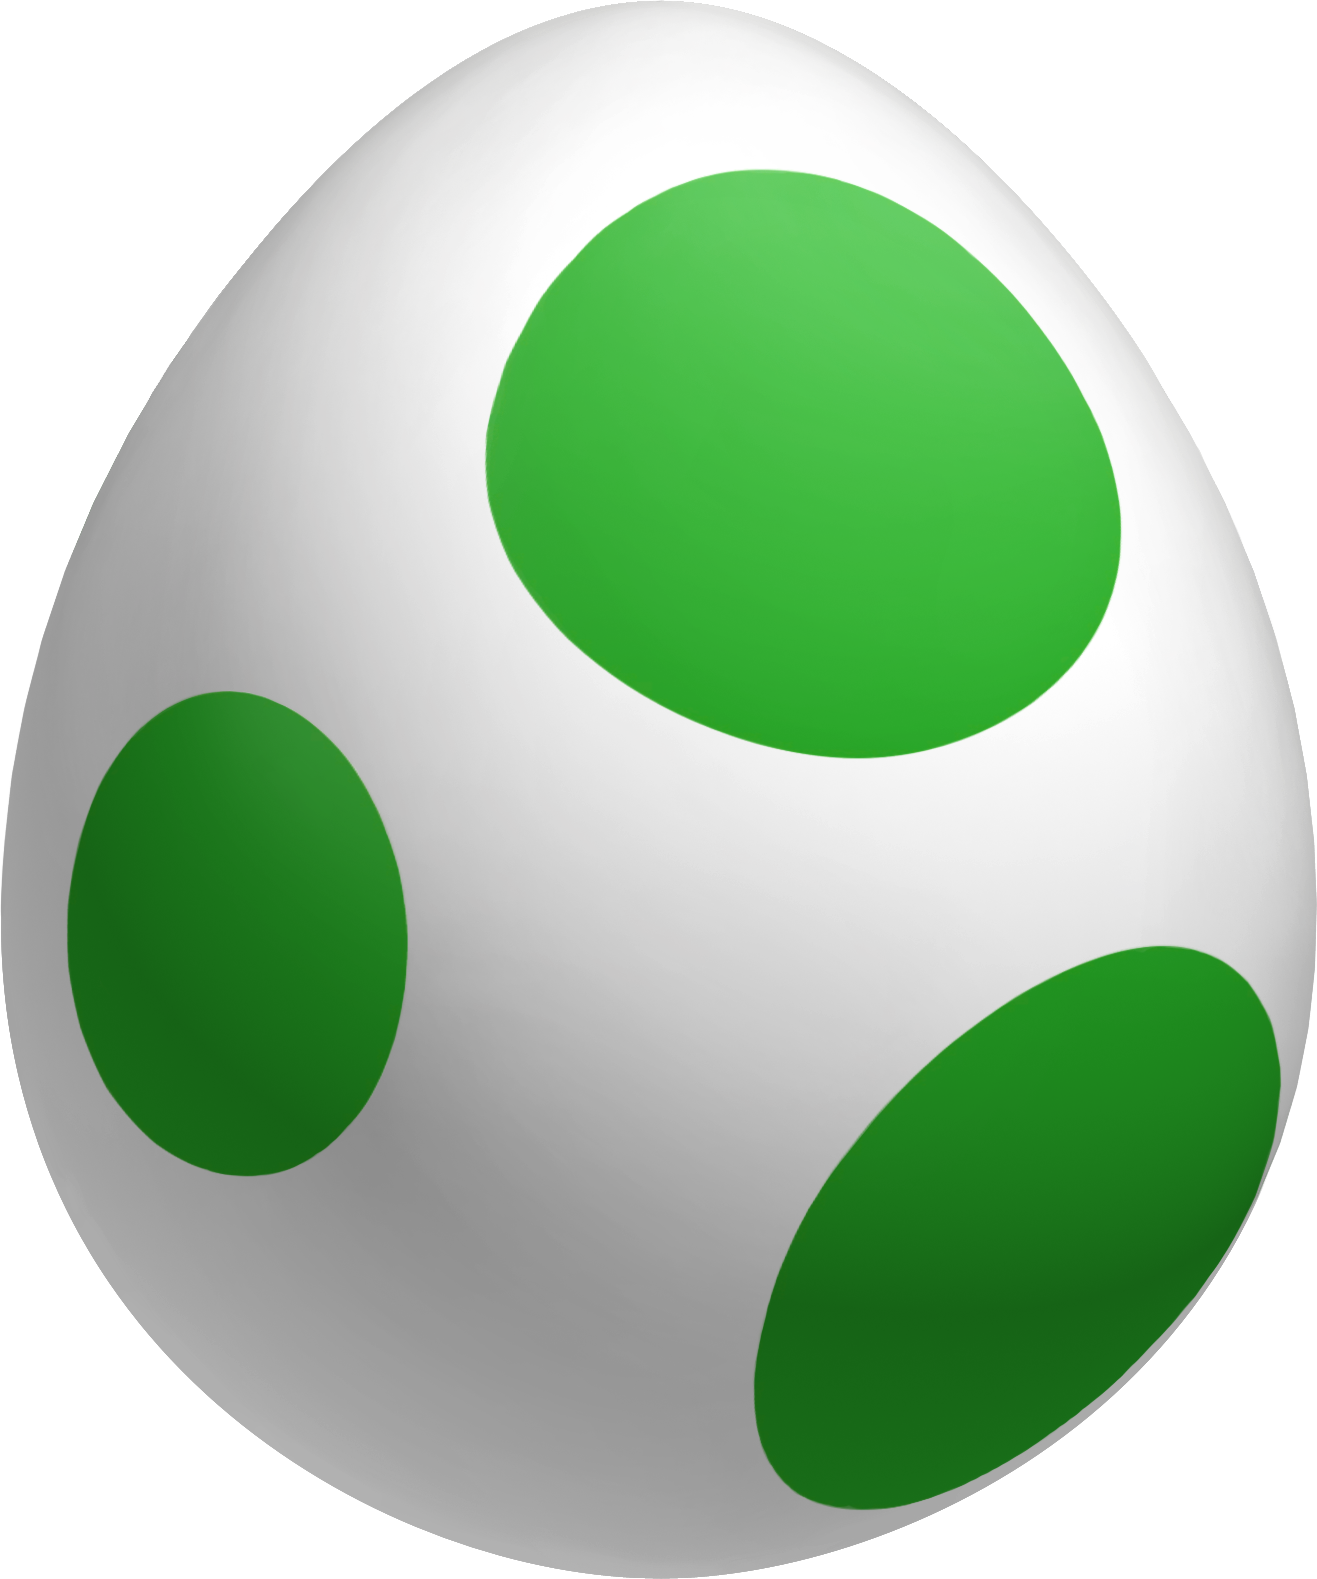 The Green Yoshi Egg